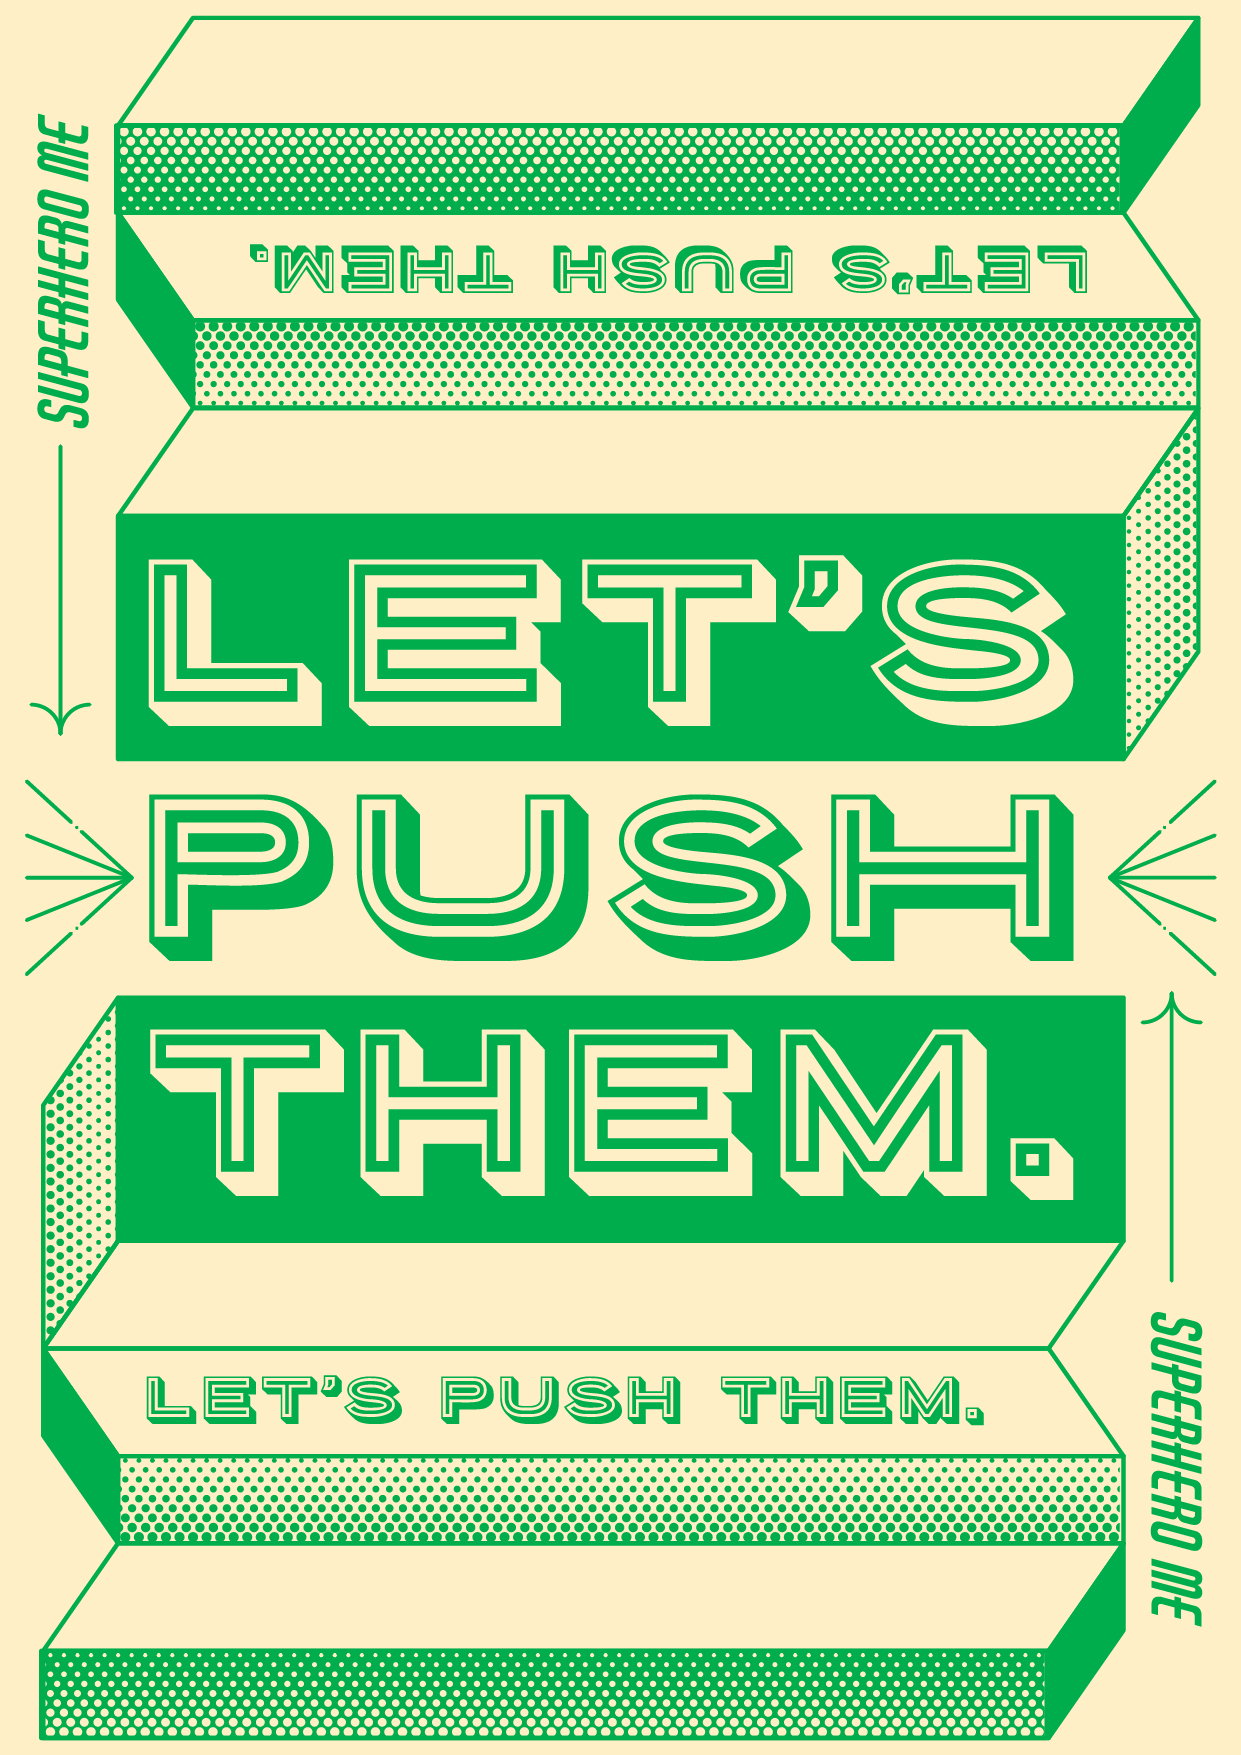 Let's push them